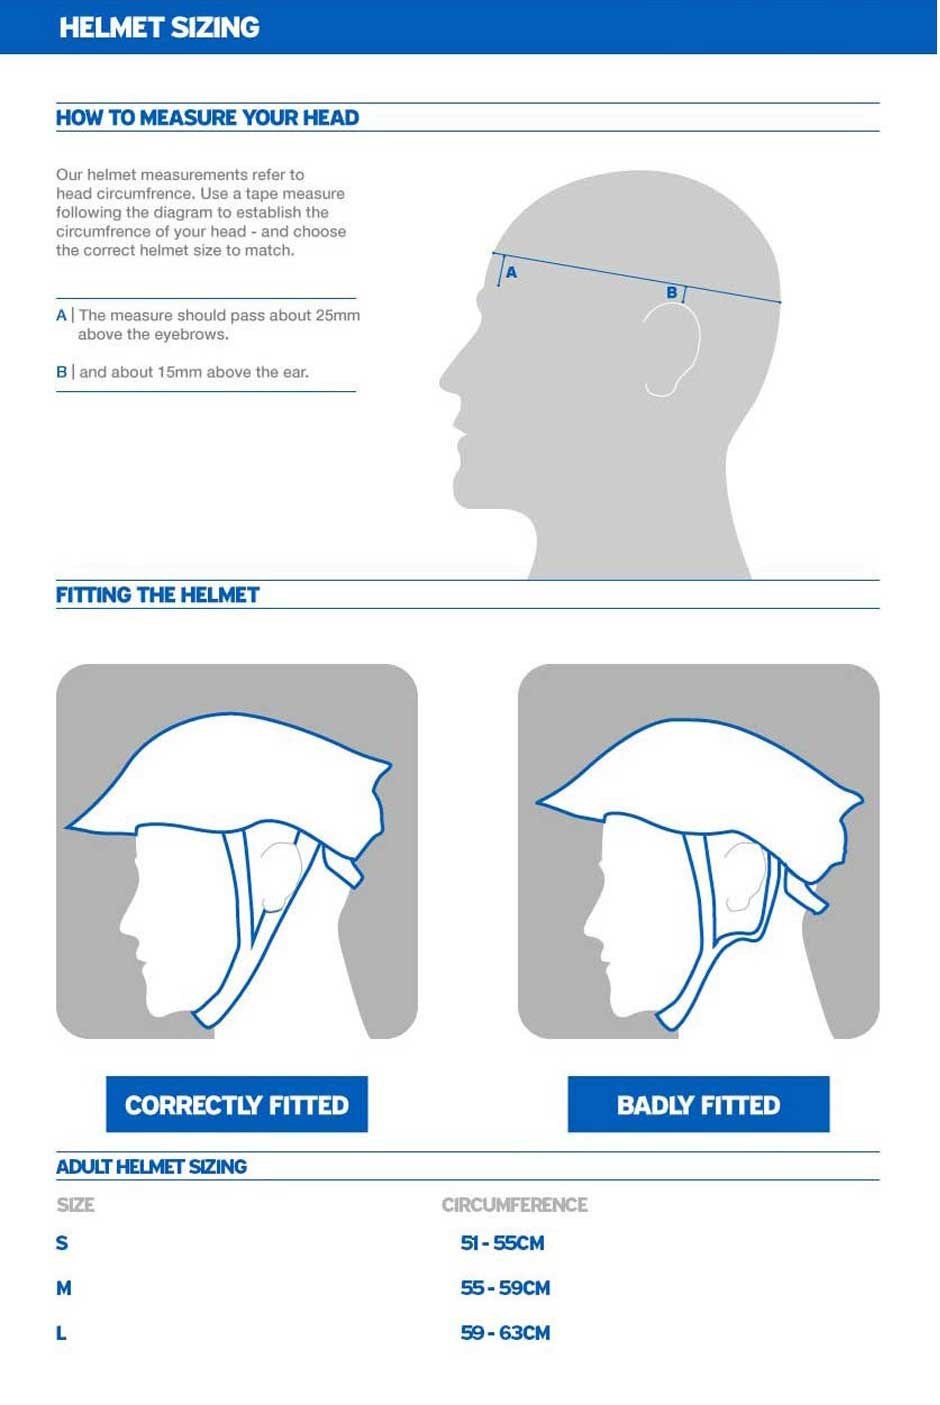 Giant Helmet sizing chart